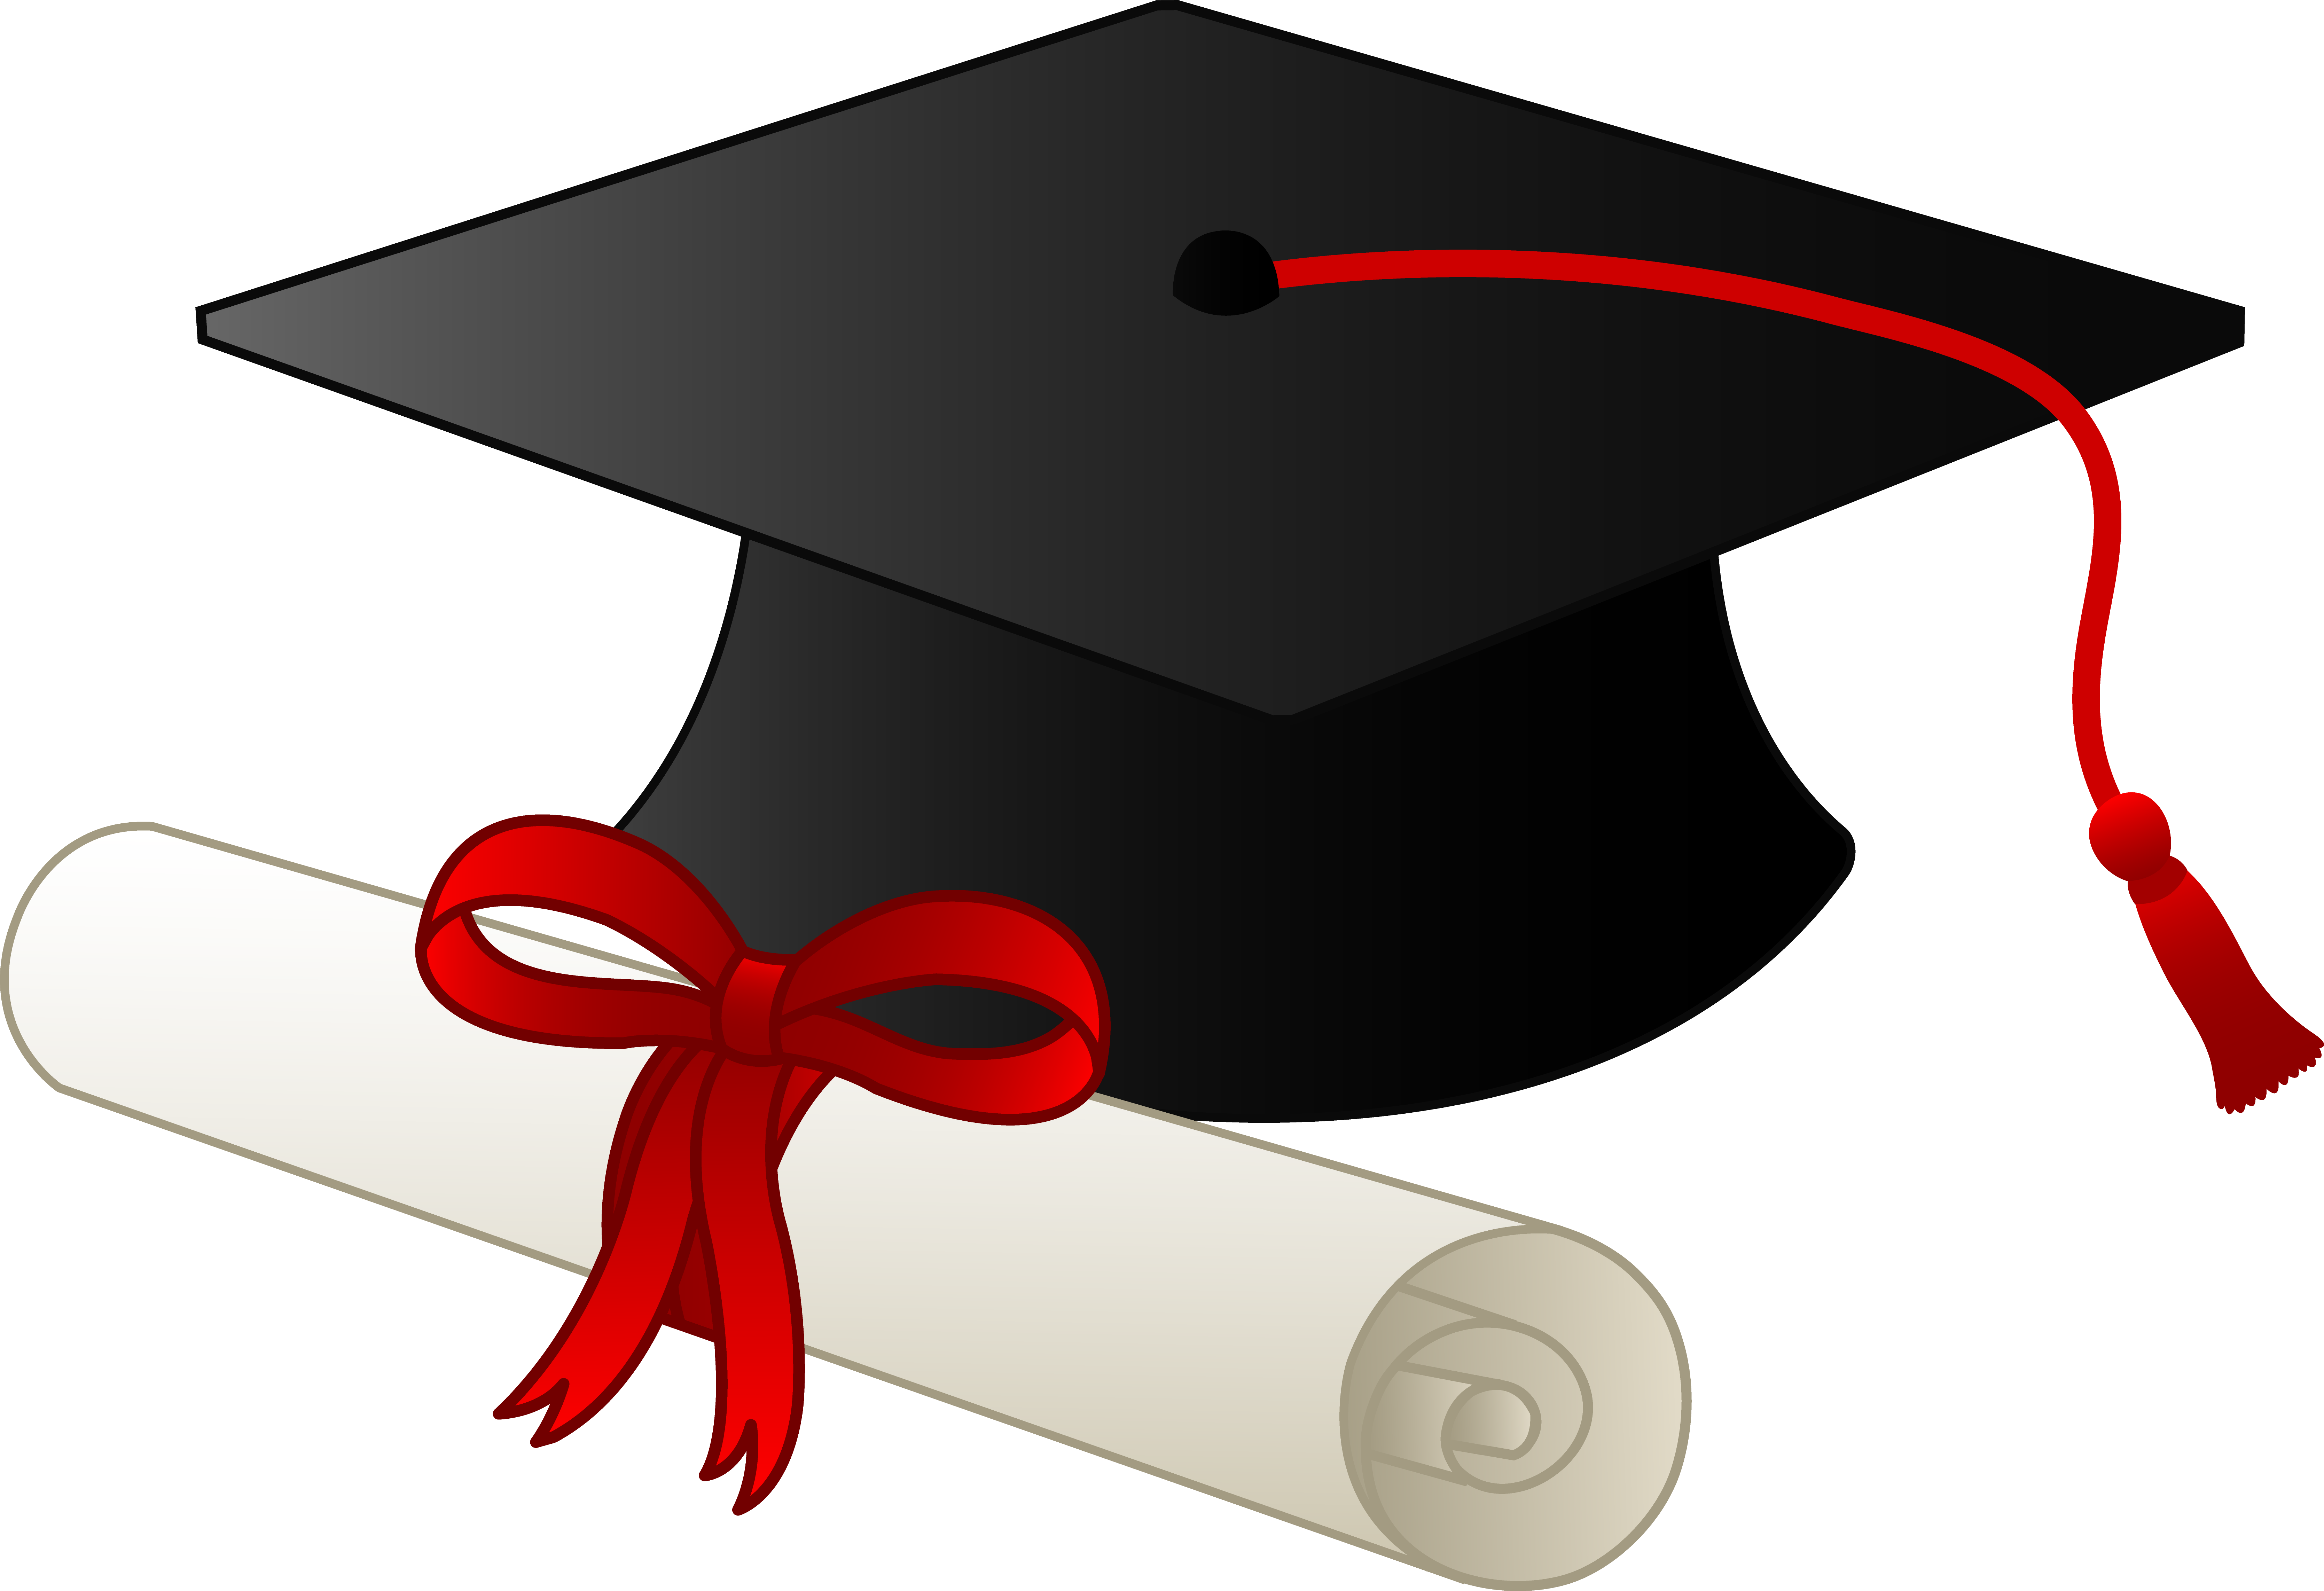 Free Graduation Hat Clip Art